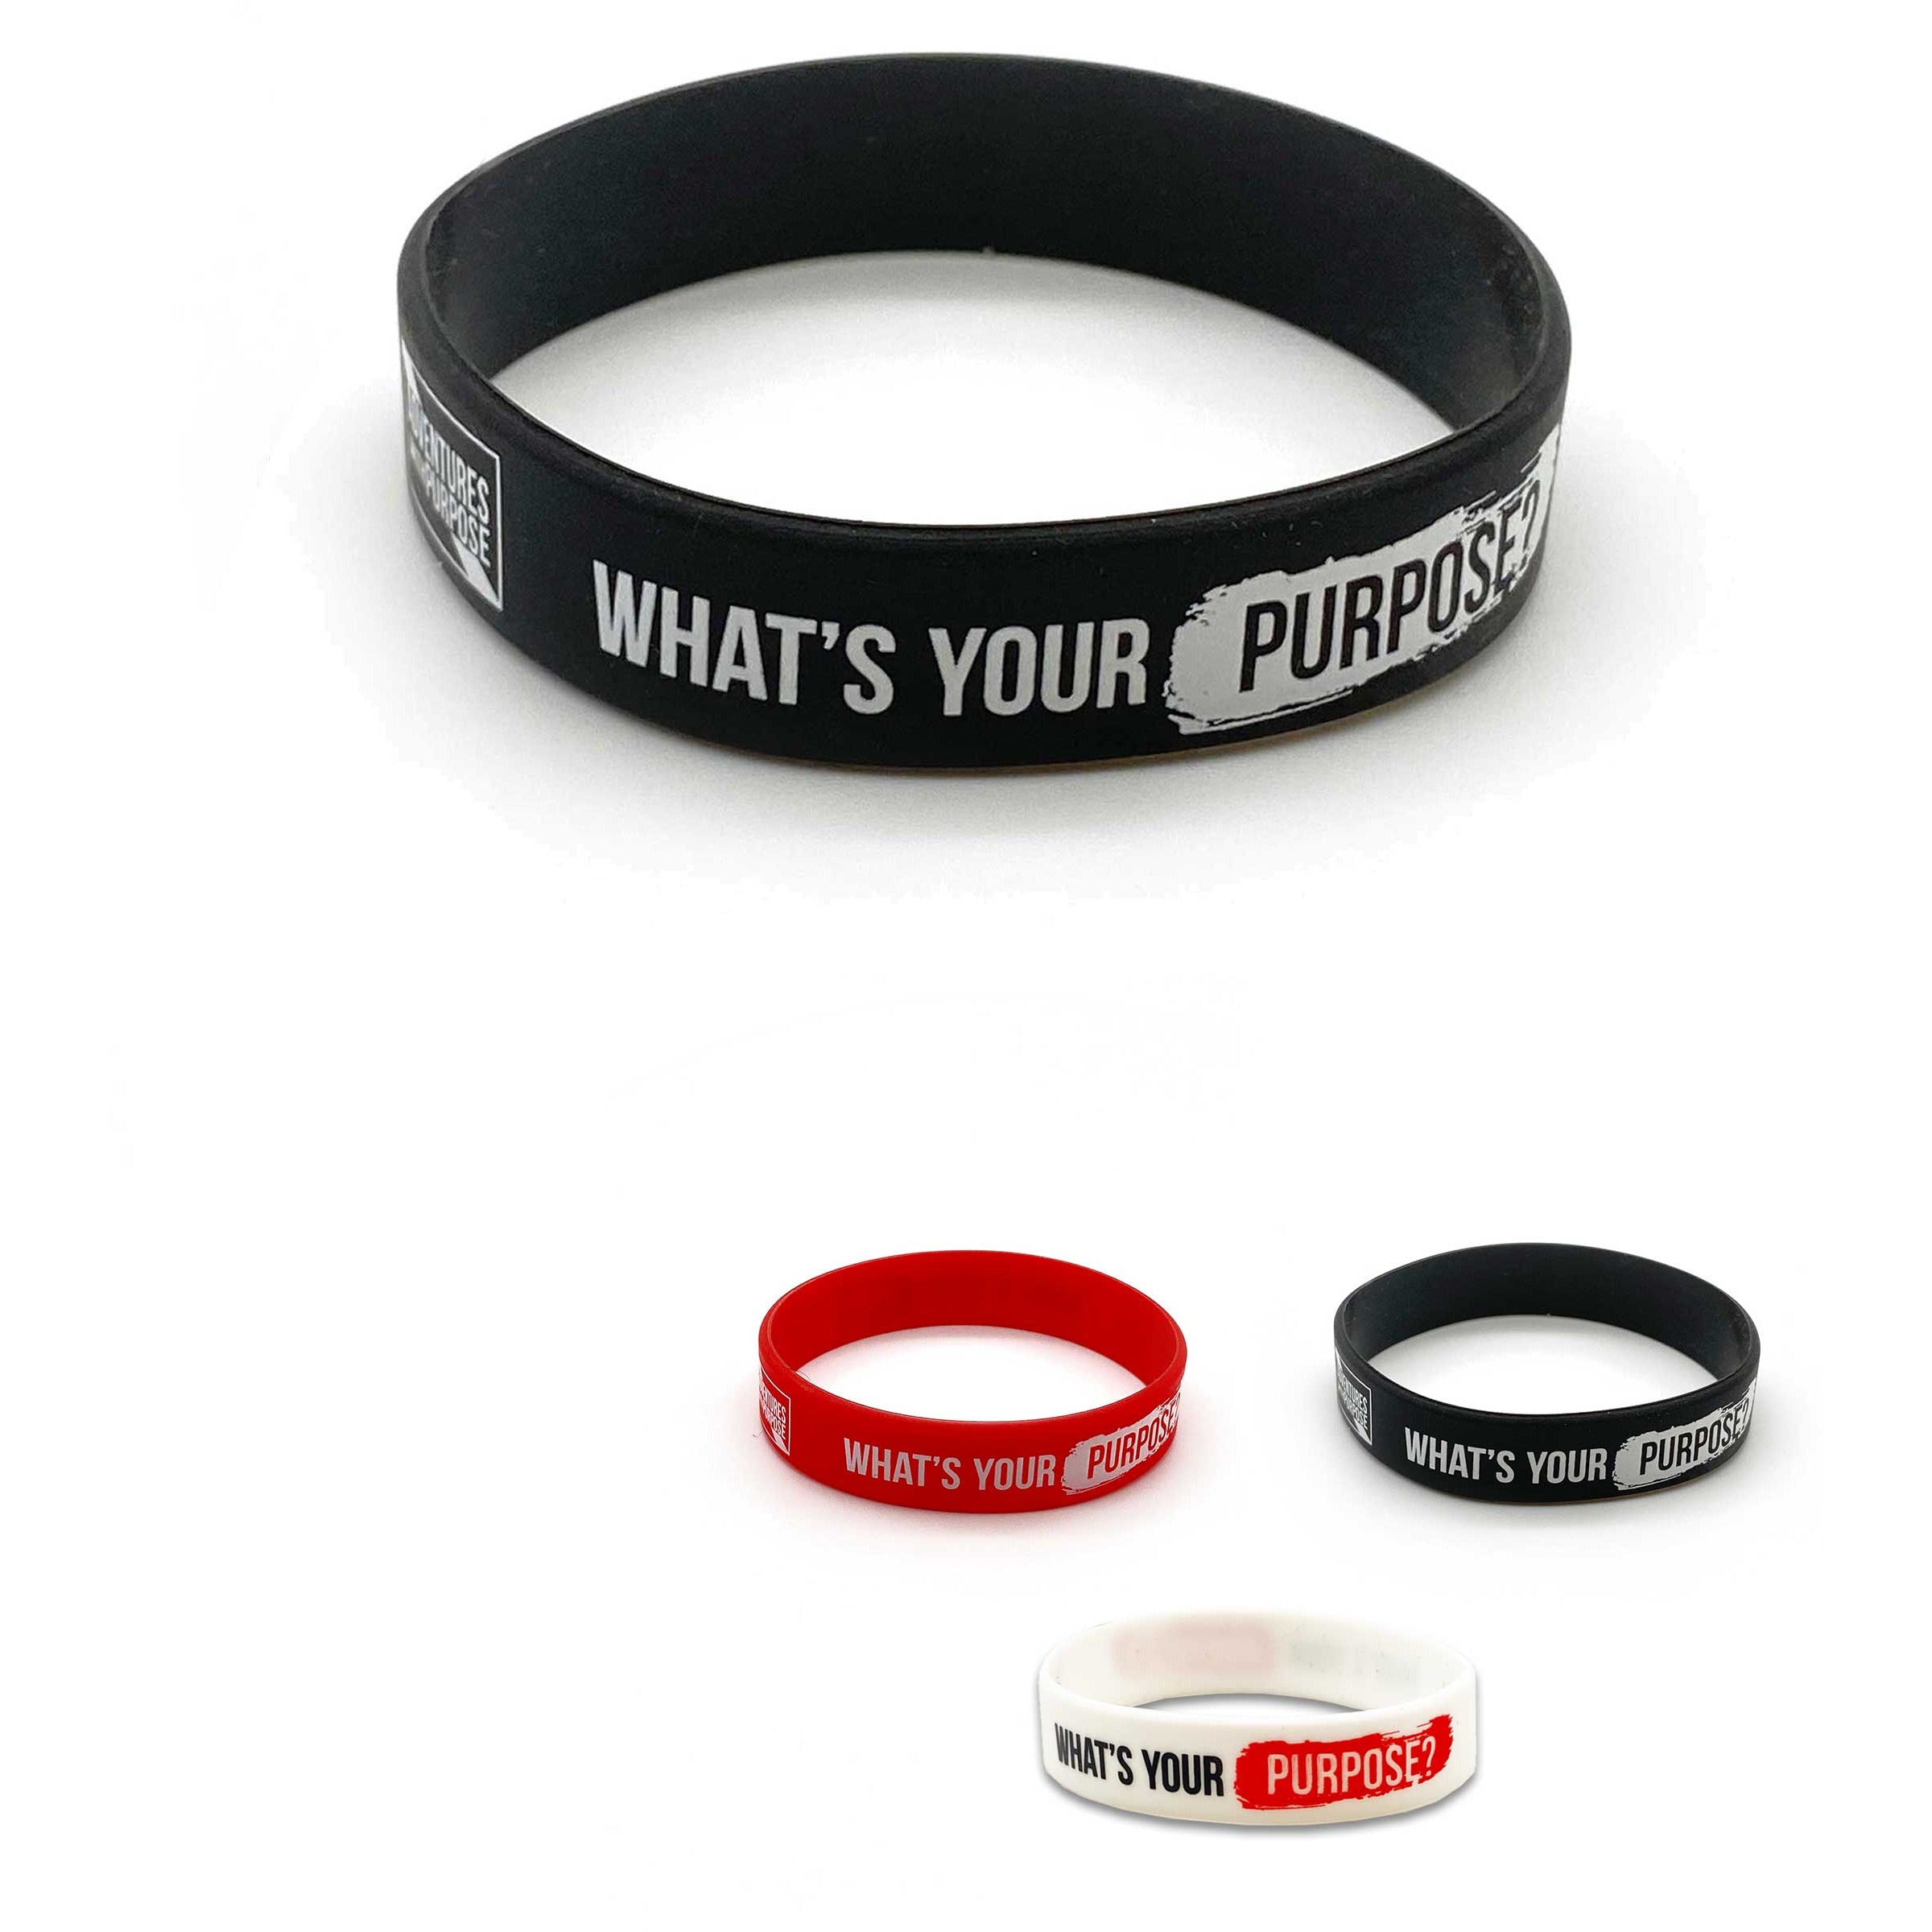 WHAT'S YOUR PURPOSE? Premium Soft Silicone Wristbands